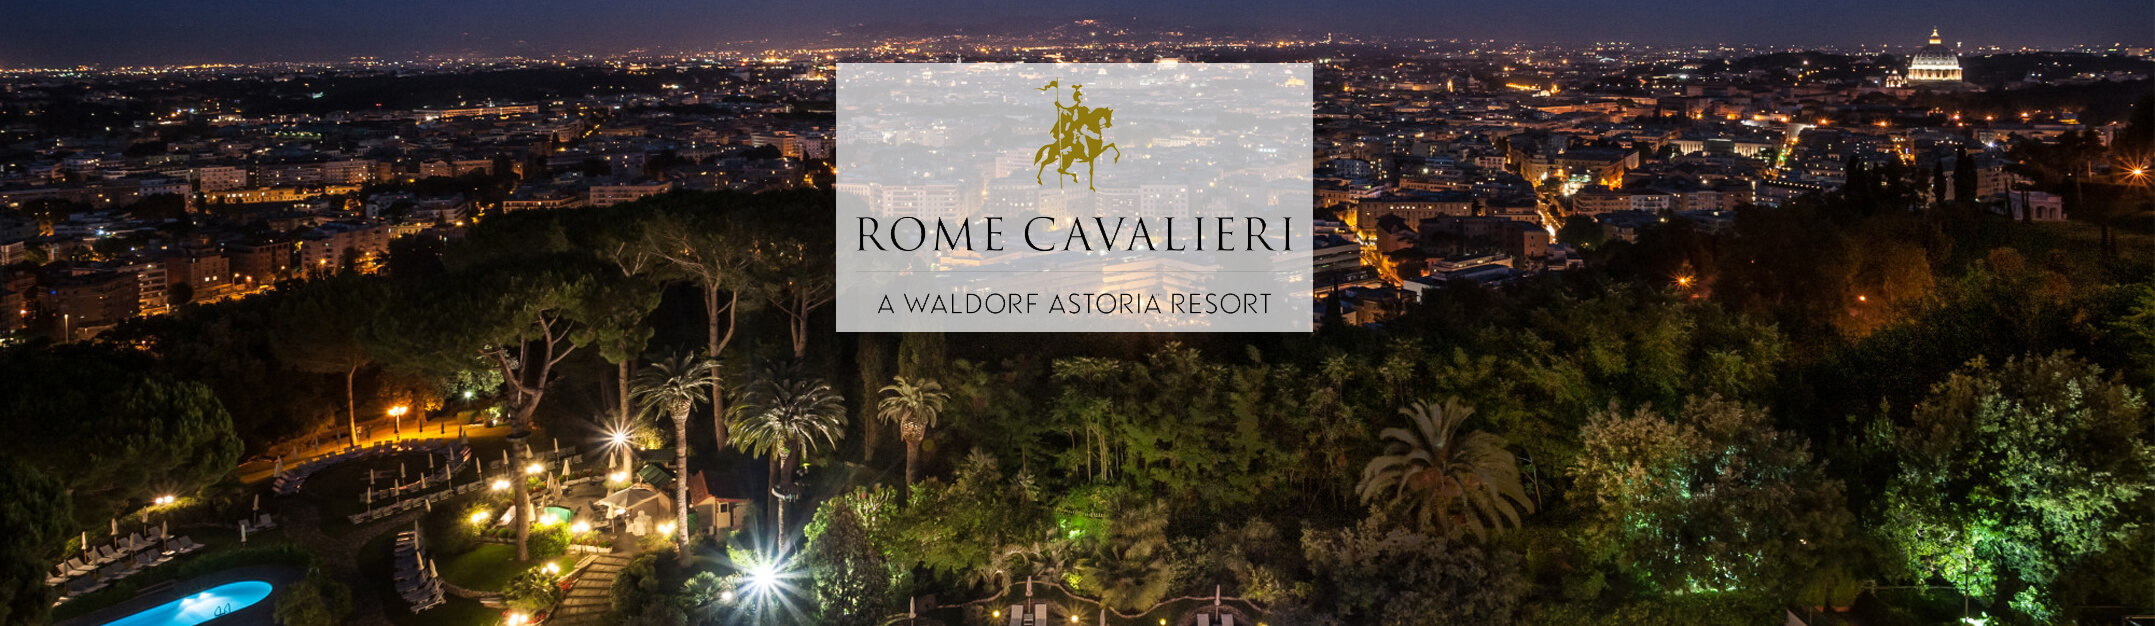 Rome Cavalieri Waldorf Astoria